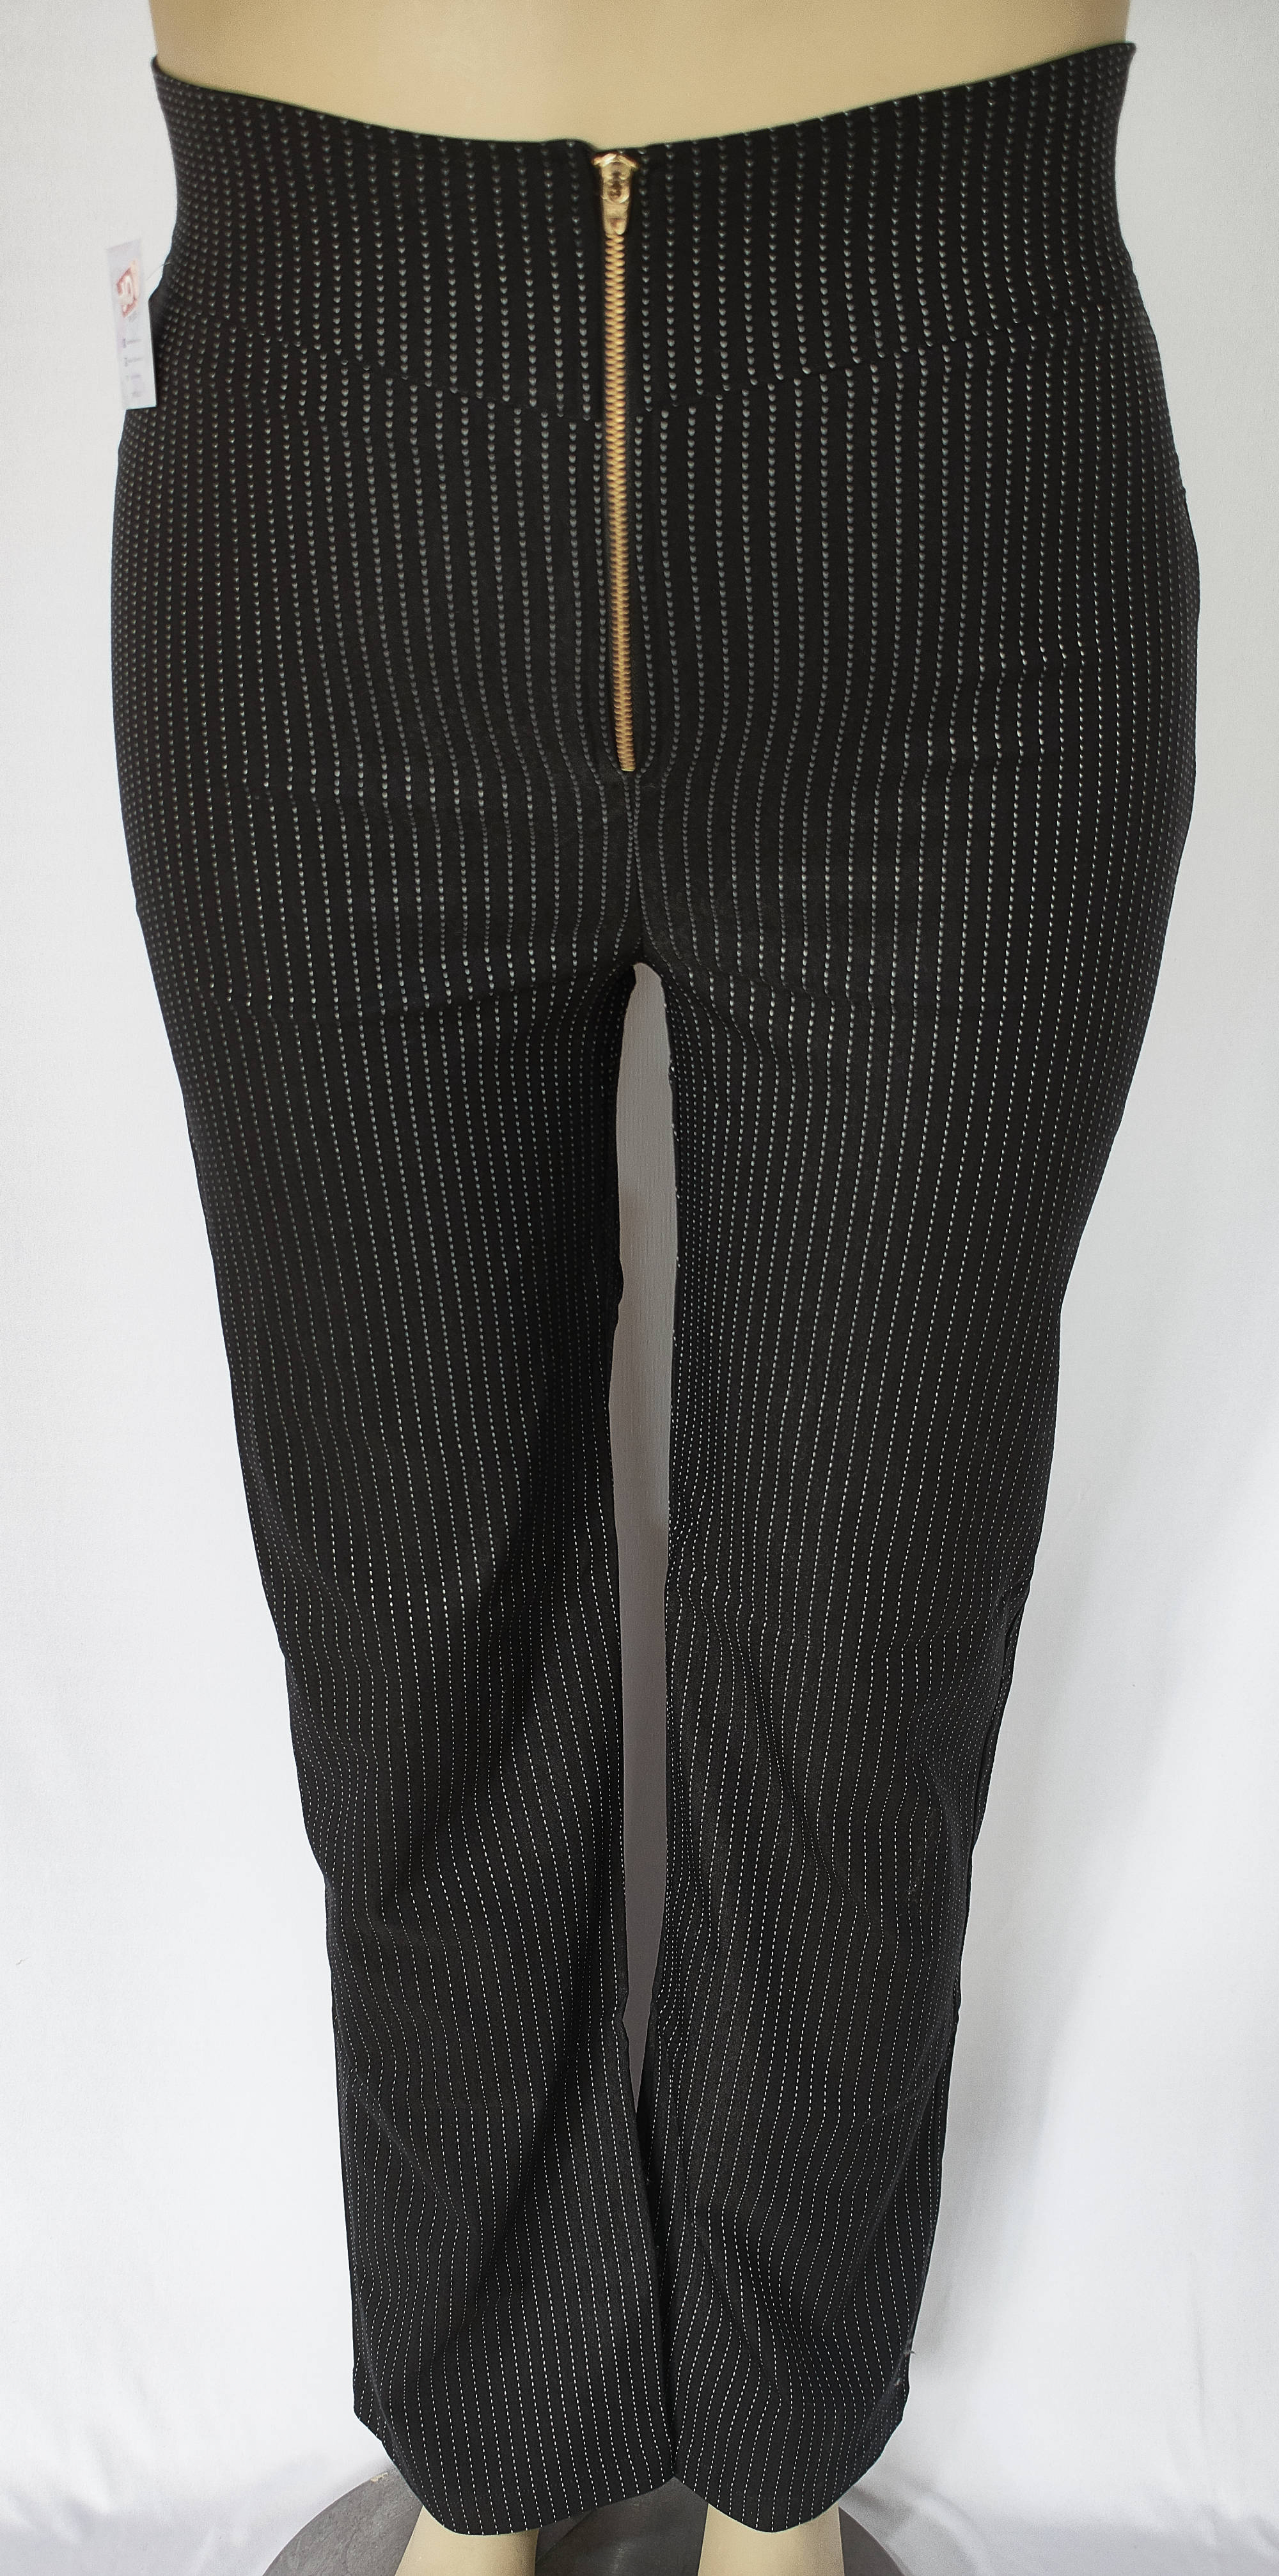 Pantalon tipo leggins color negro Tallas 16 a la 22 de JoPlus Tallas Grandes